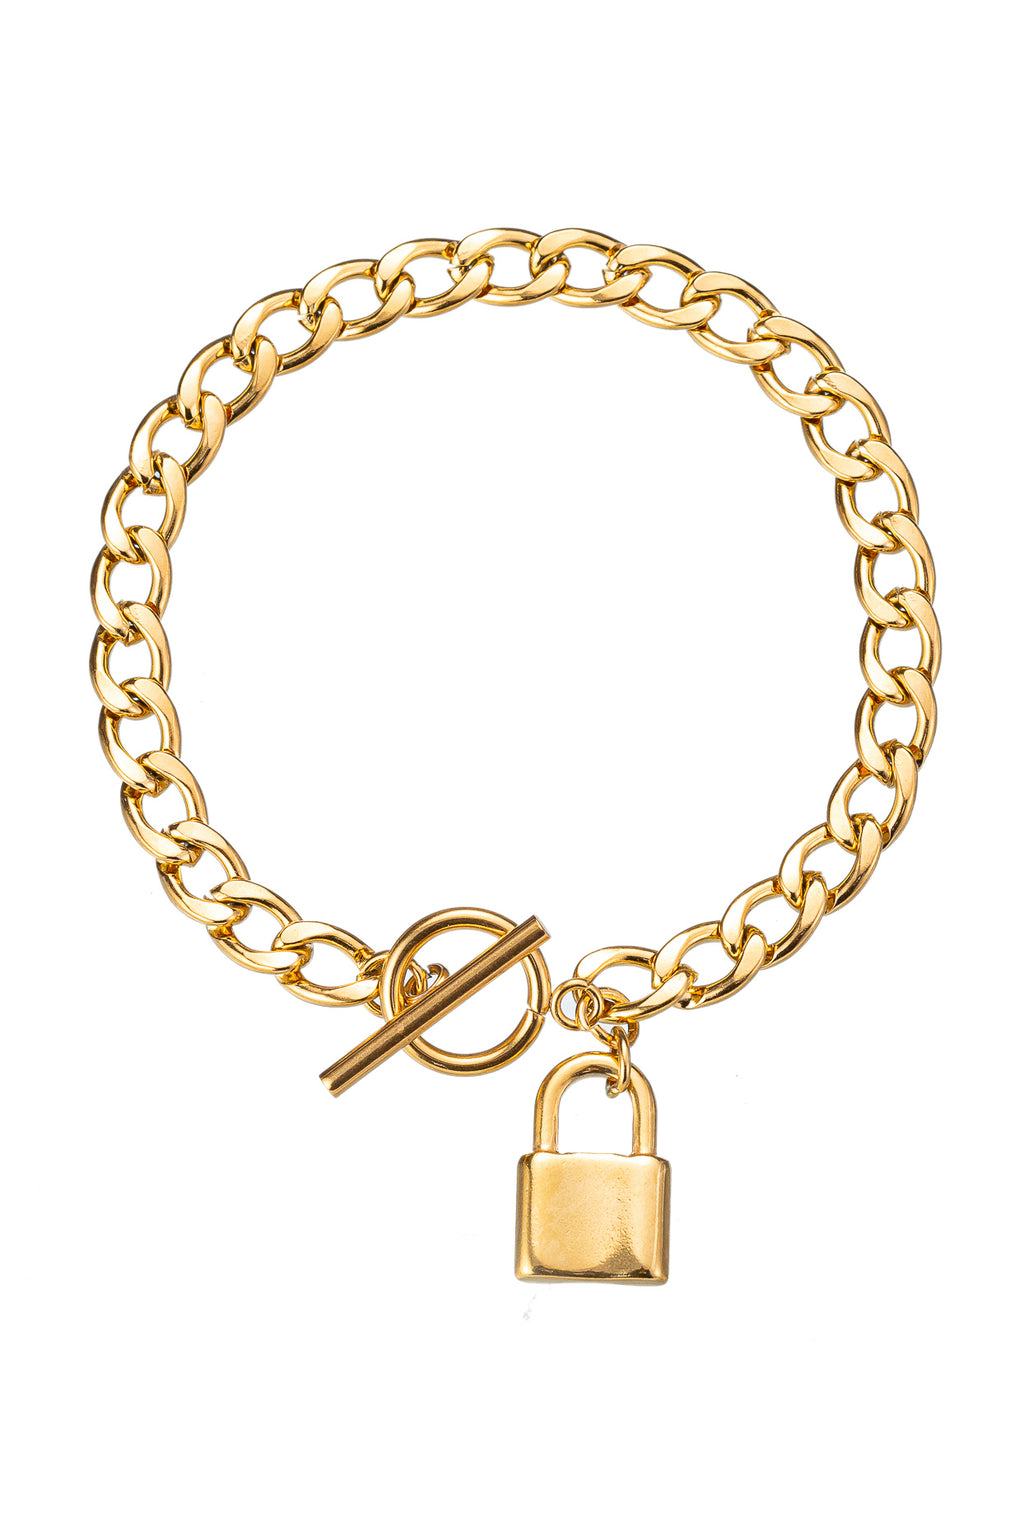 Buy University Trendz Stainless Steel Golden Heart Lock and Key Bracelet  Pendant Set for Couples Men and Women at Amazon.in